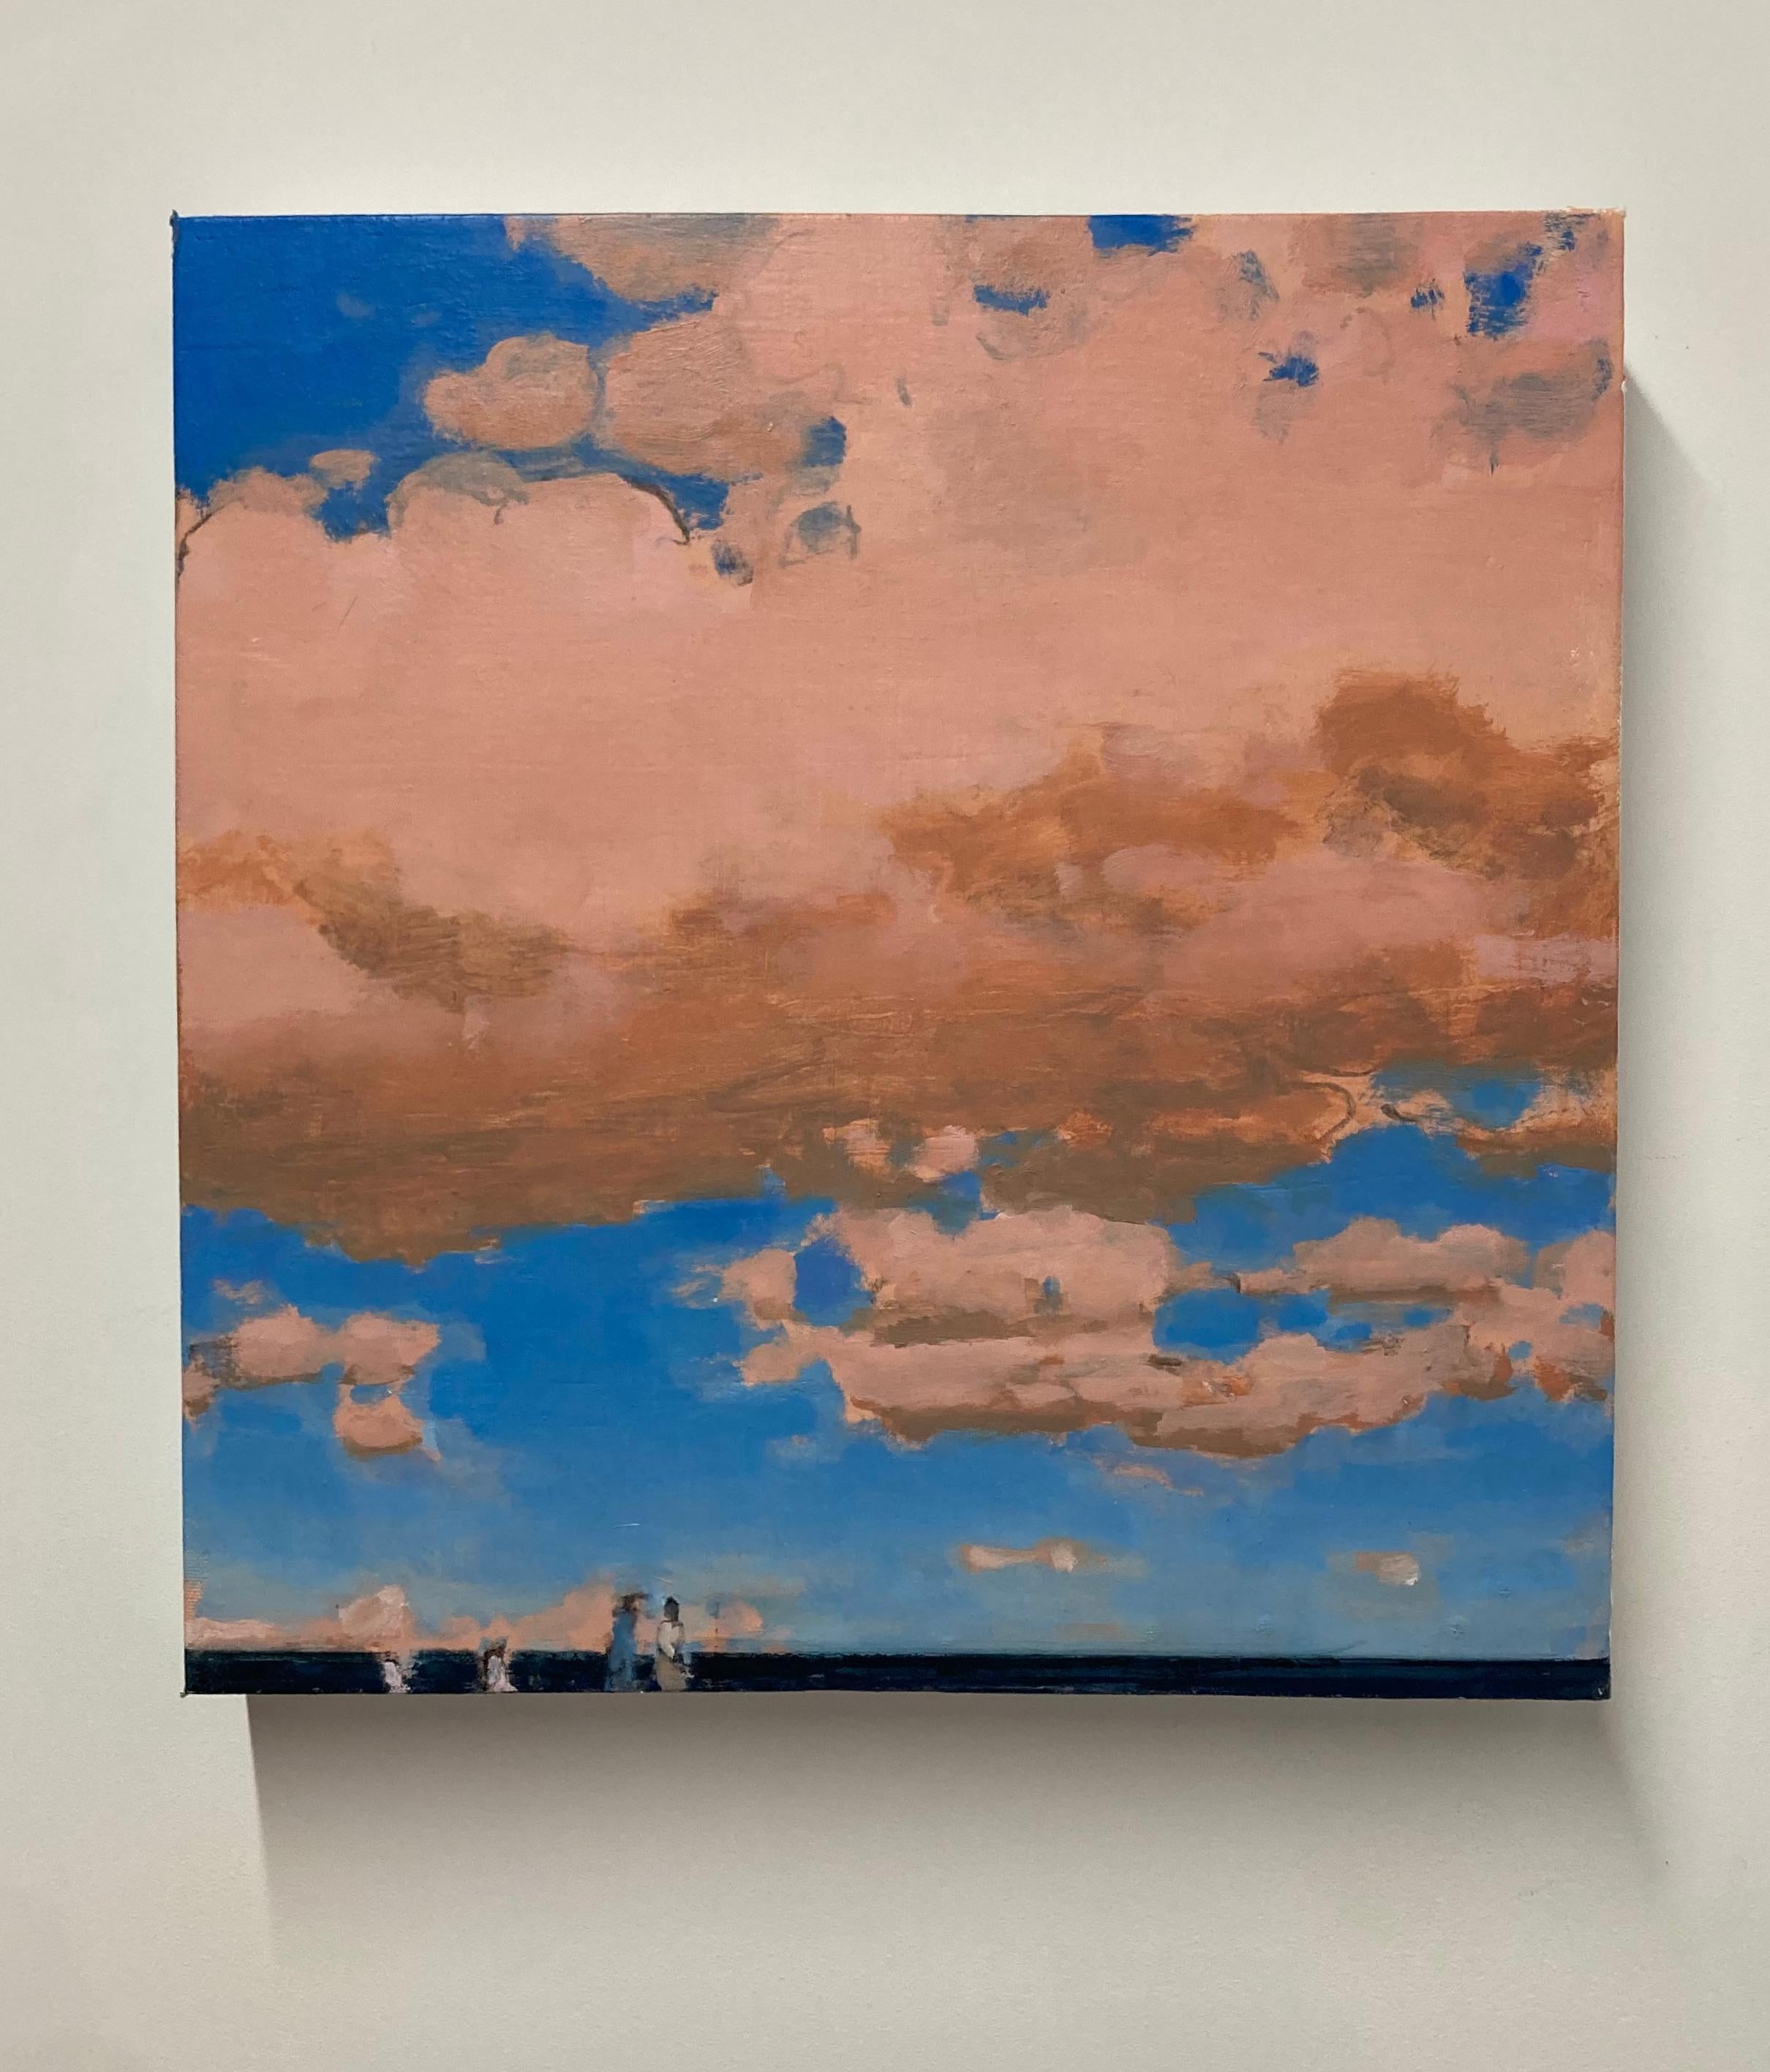 Five, Summer Beach Landscape, Salmon Pink Clouds, Blue Sky, Navy Ocean, Figures - Painting by David Konigsberg